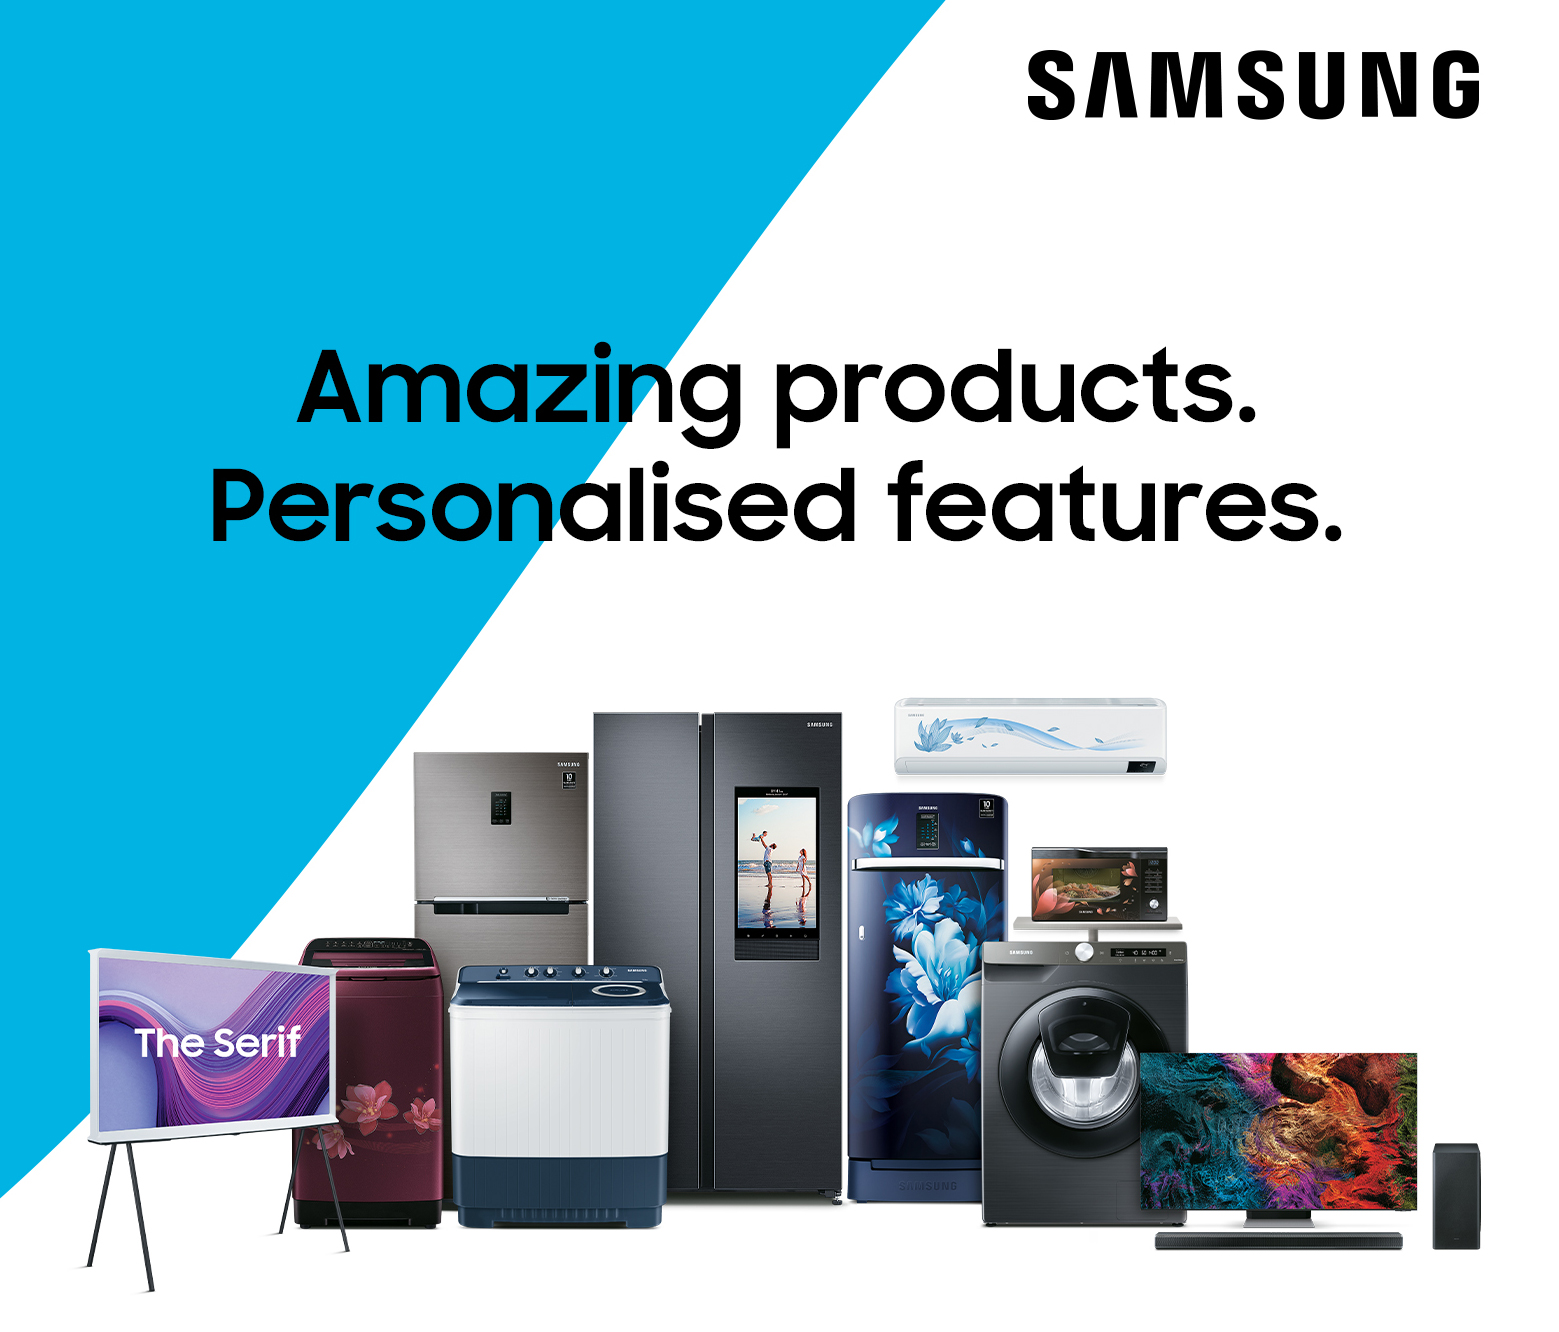 Samsung Bets Big on High-Capacity Refrigerators in Chennai